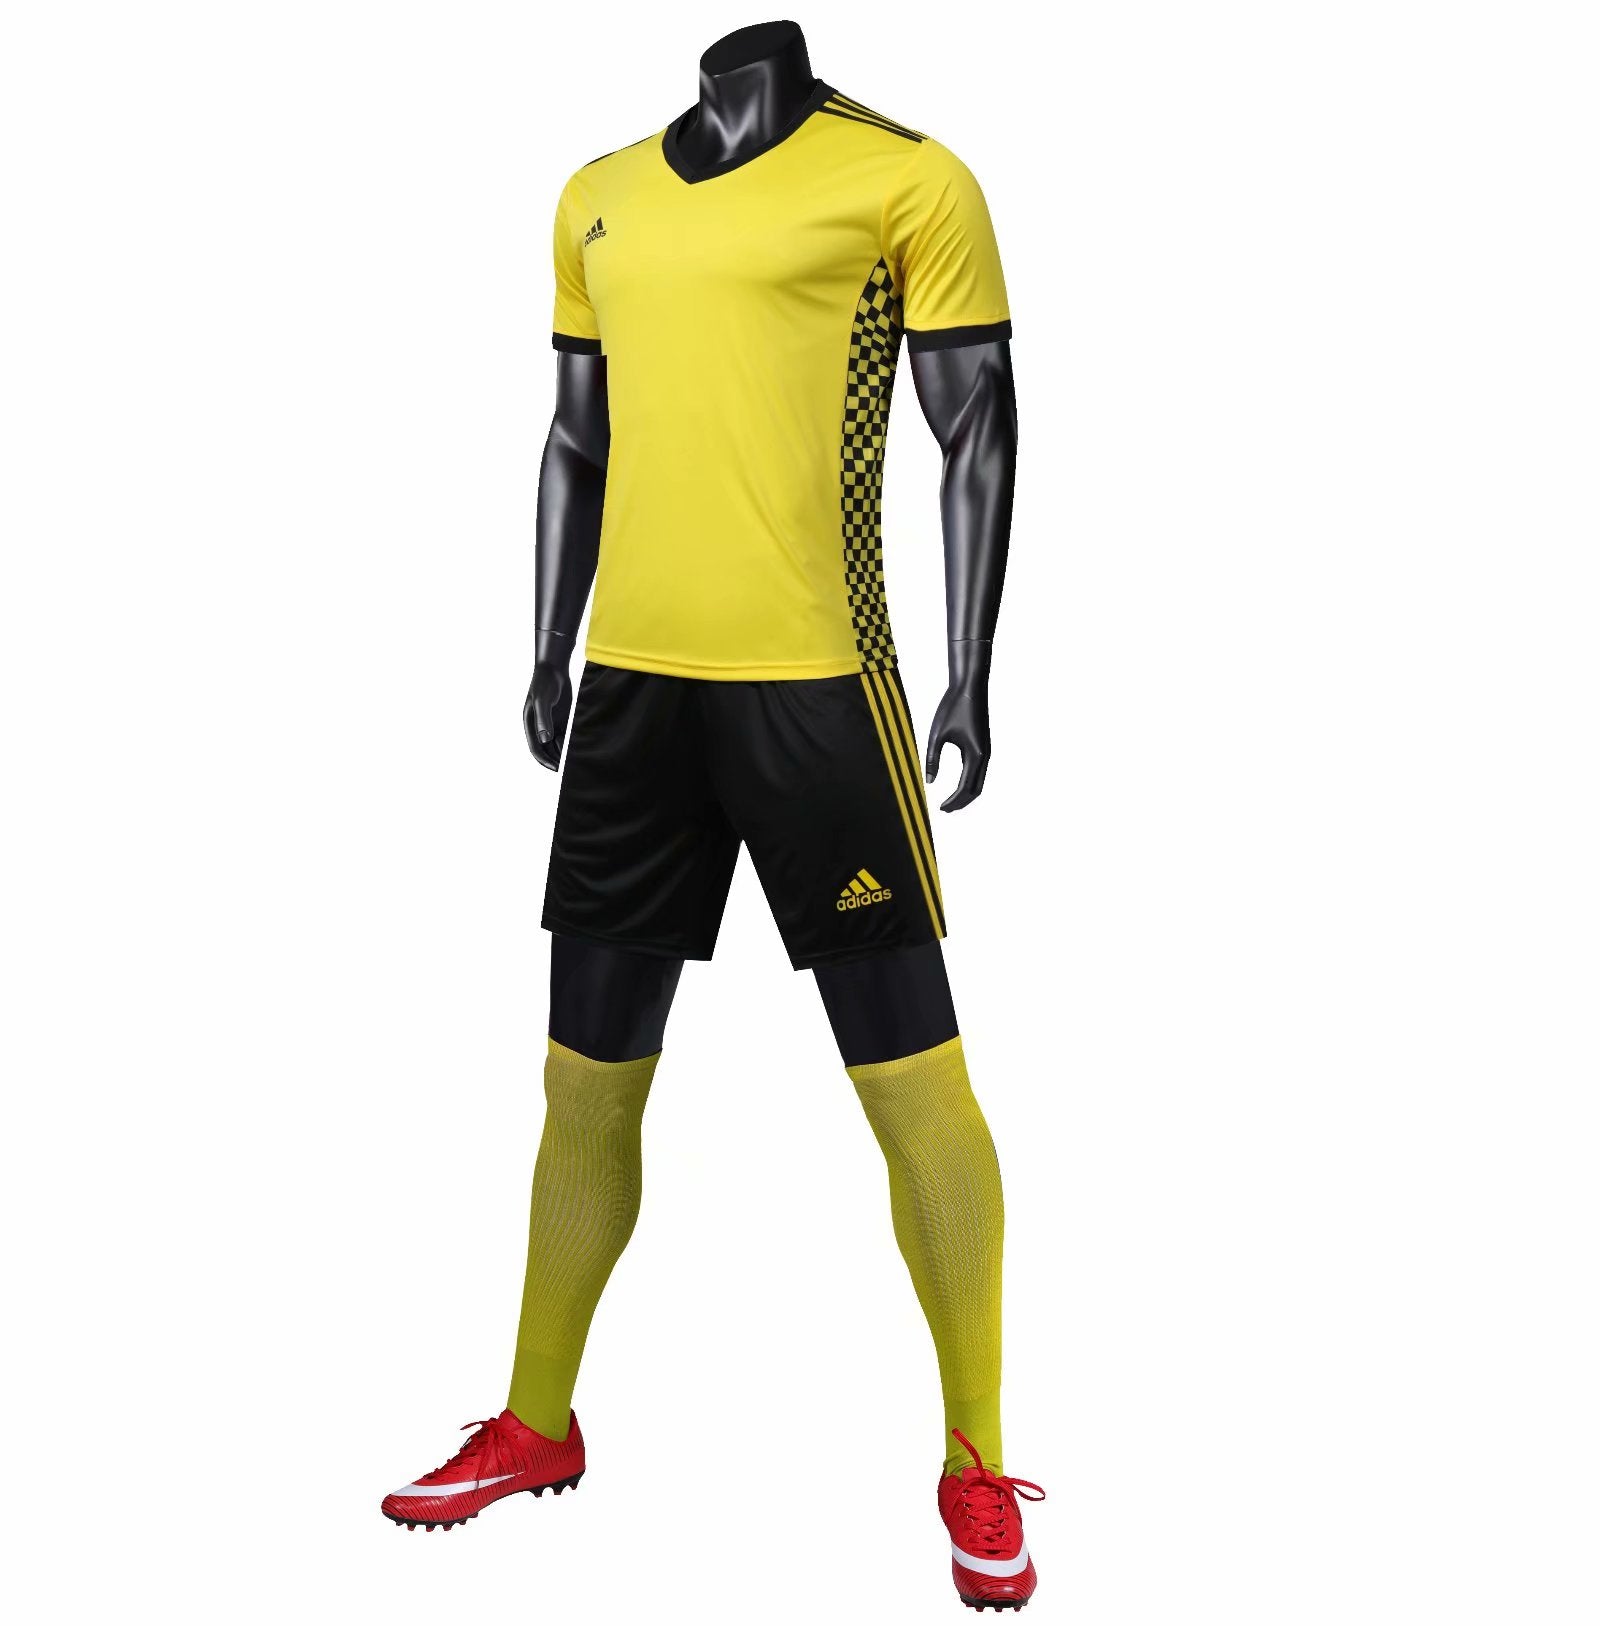 adidas yellow and black football kit